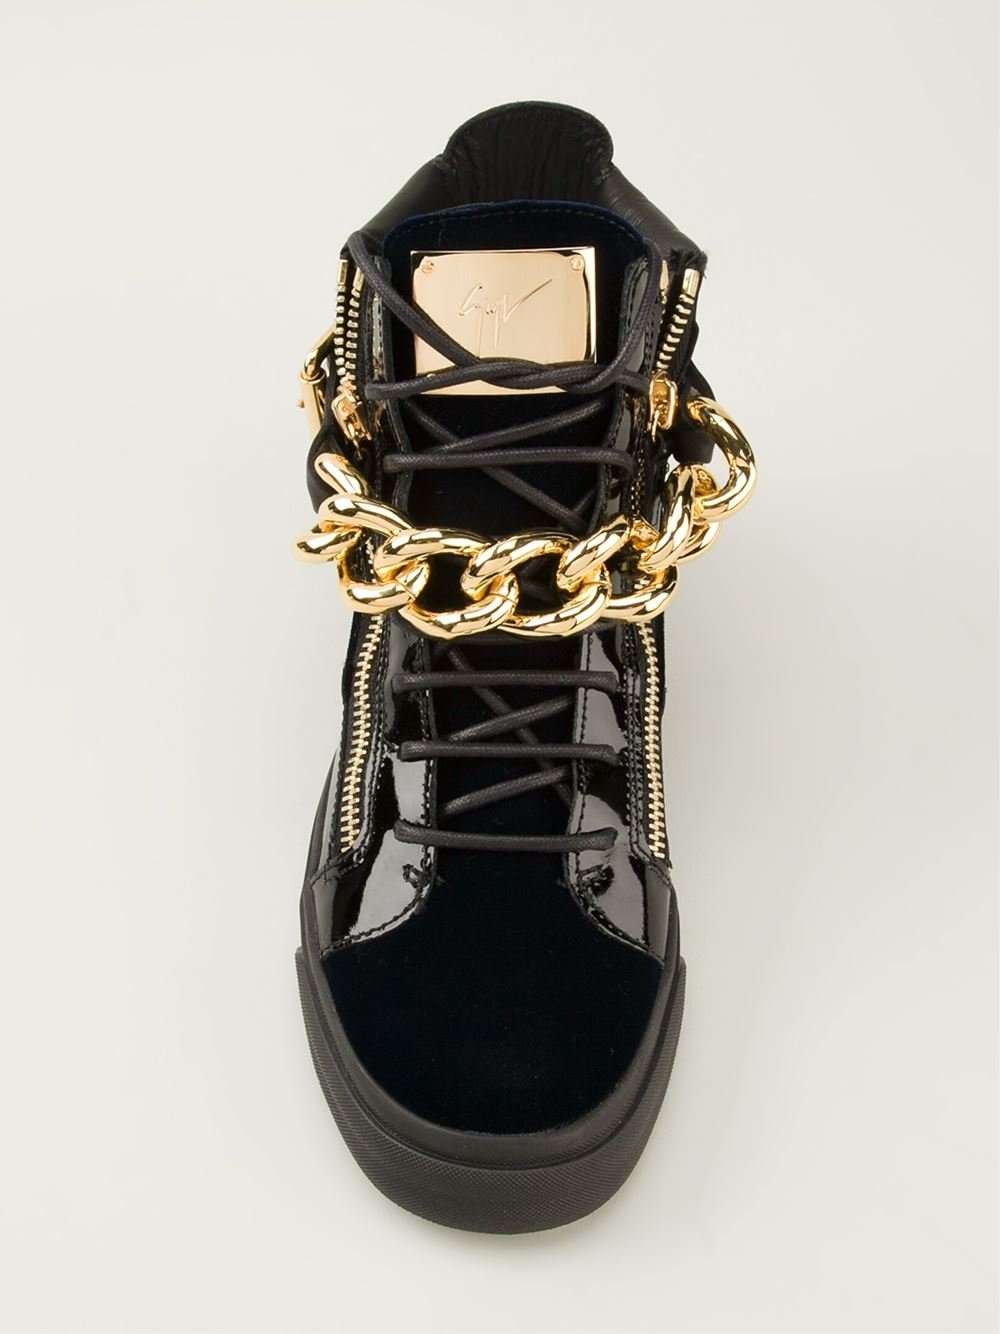 Giuseppe Zanotti Gold Chain Strap Hitop Sneakers in Black for Men - Lyst